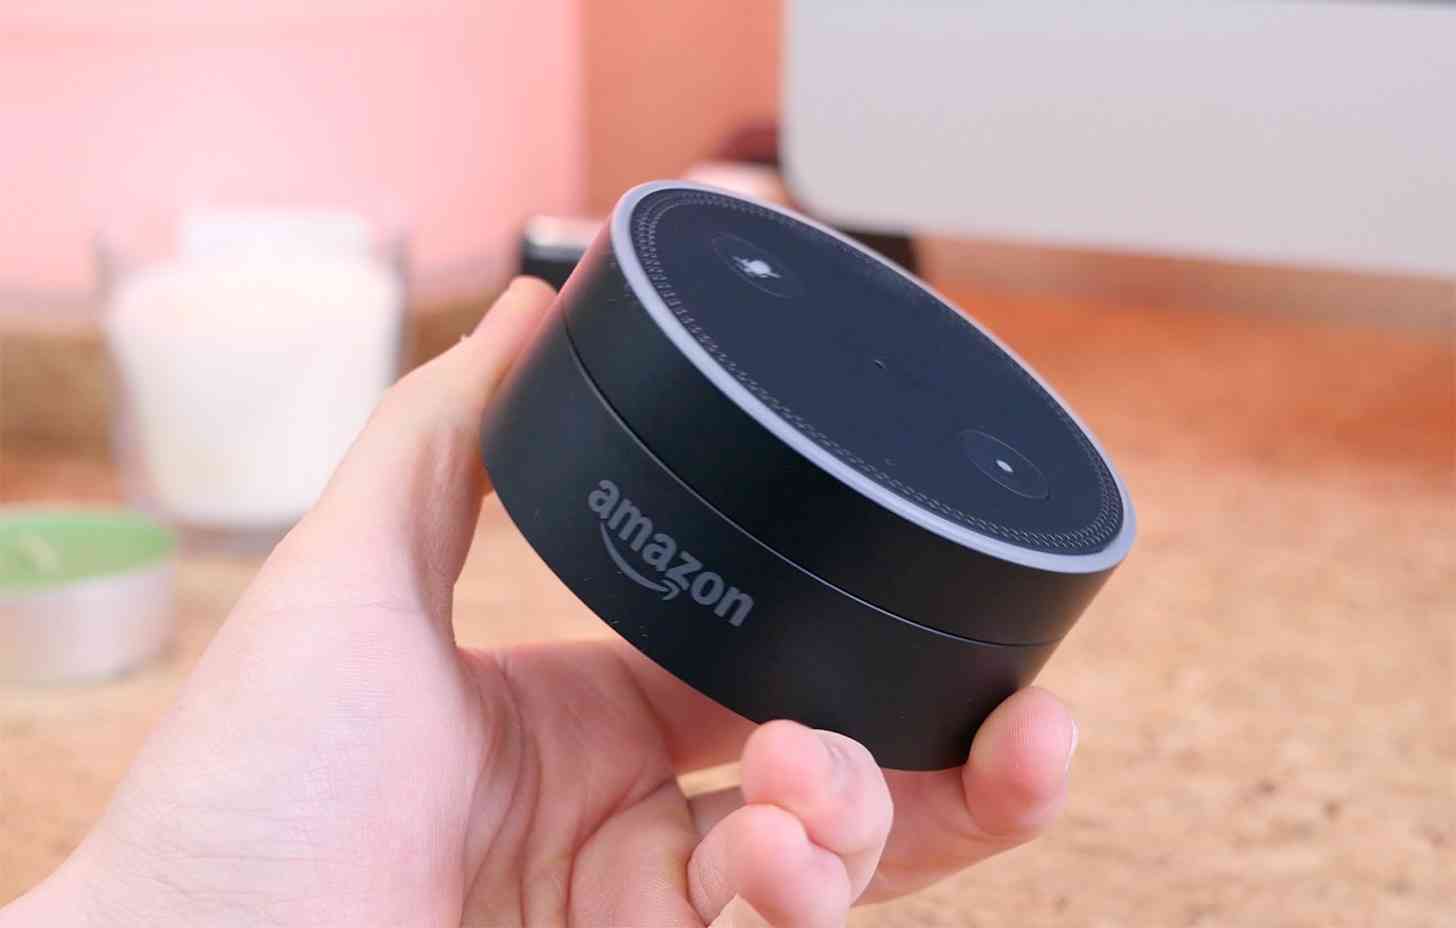 Amazon Echo Dot hands-on video